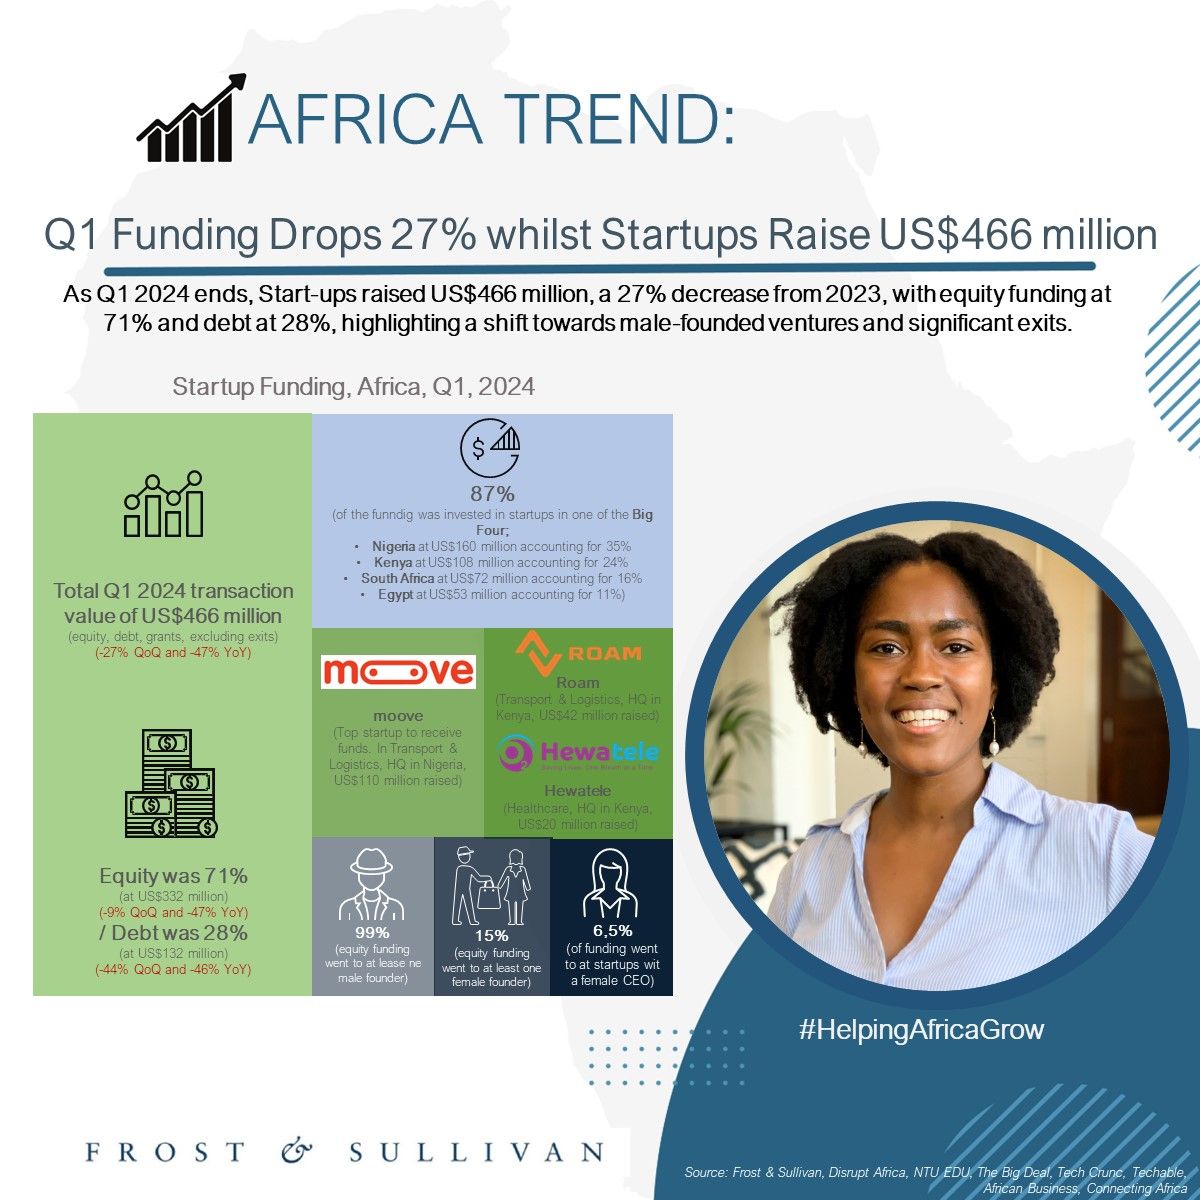 Q1 Funding Drops 27% whilst Startups Raise US$466 million